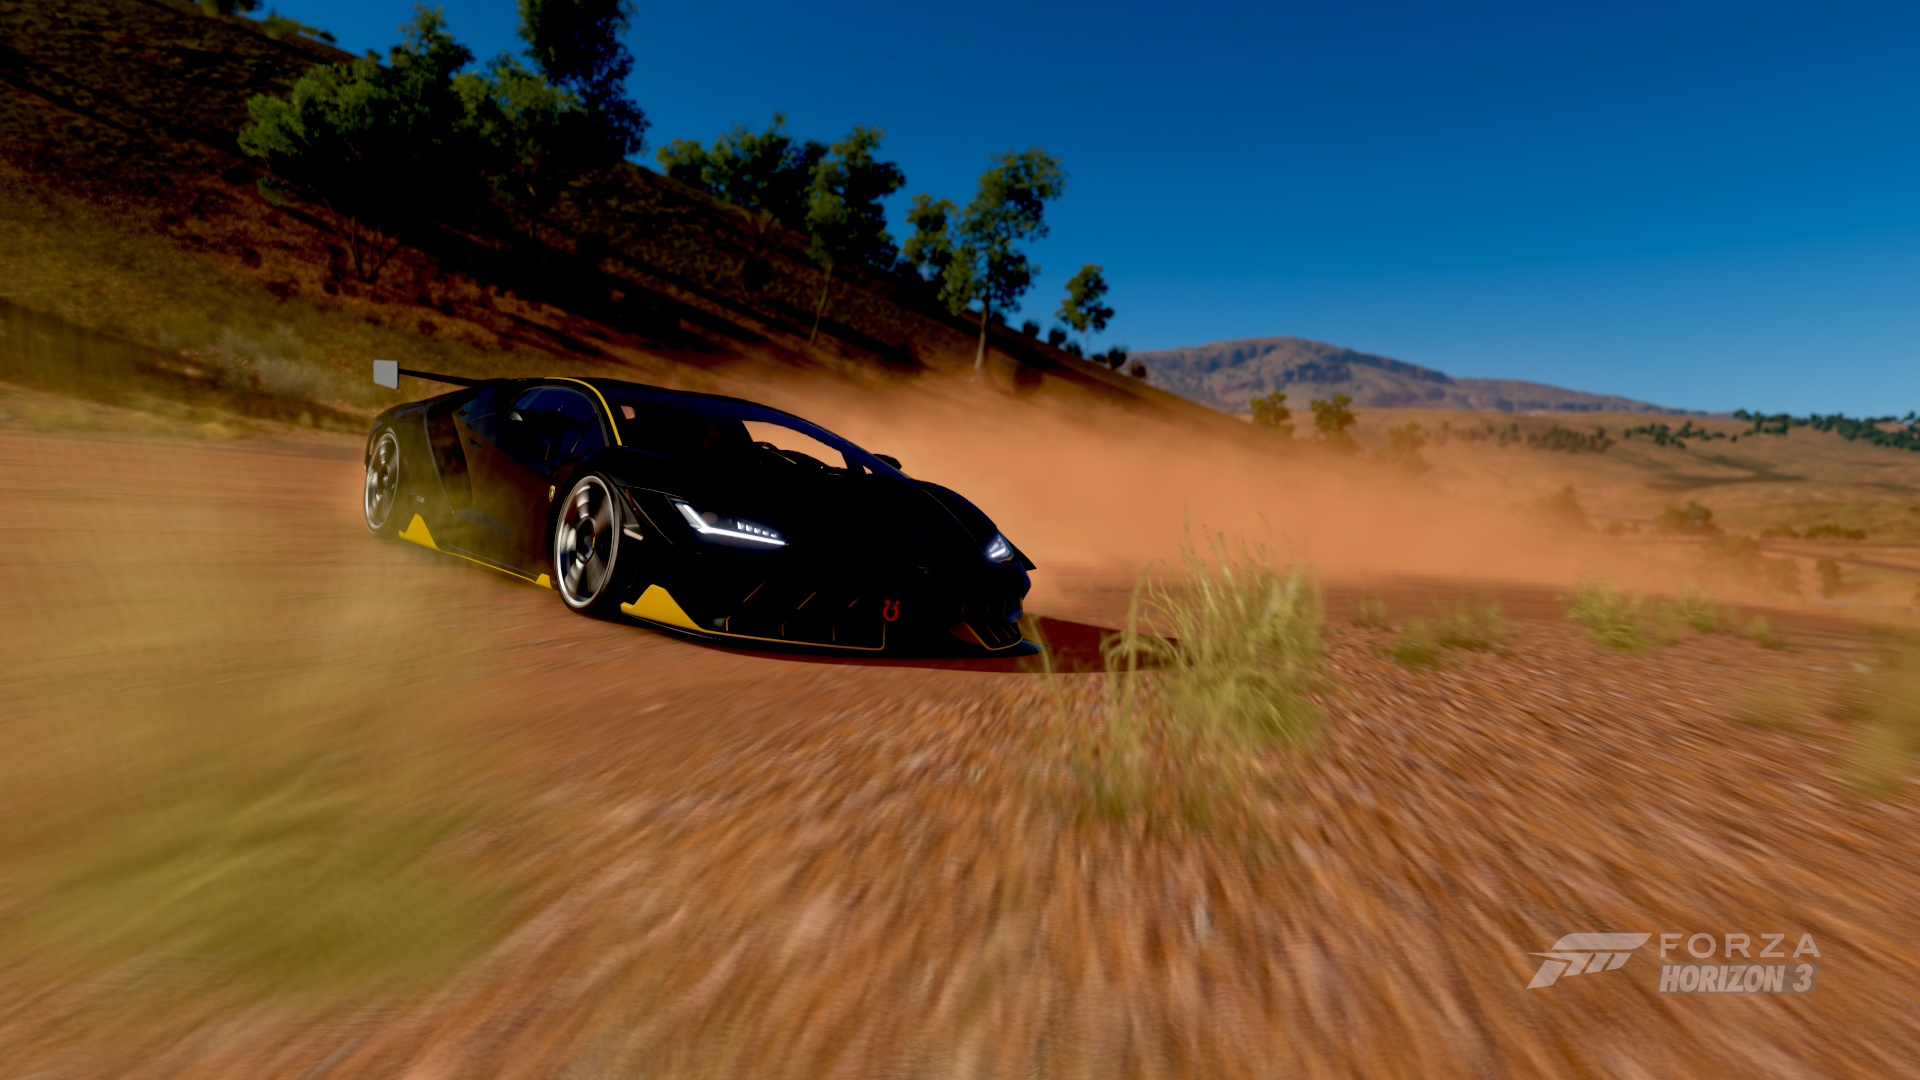 Forza horizon много денег. Lamborghini Forza Horizon 3. Forza Horizon 3 машины. Ламборджини из игры Форза хорайзон 1. Forza Horizon 3 Holden.